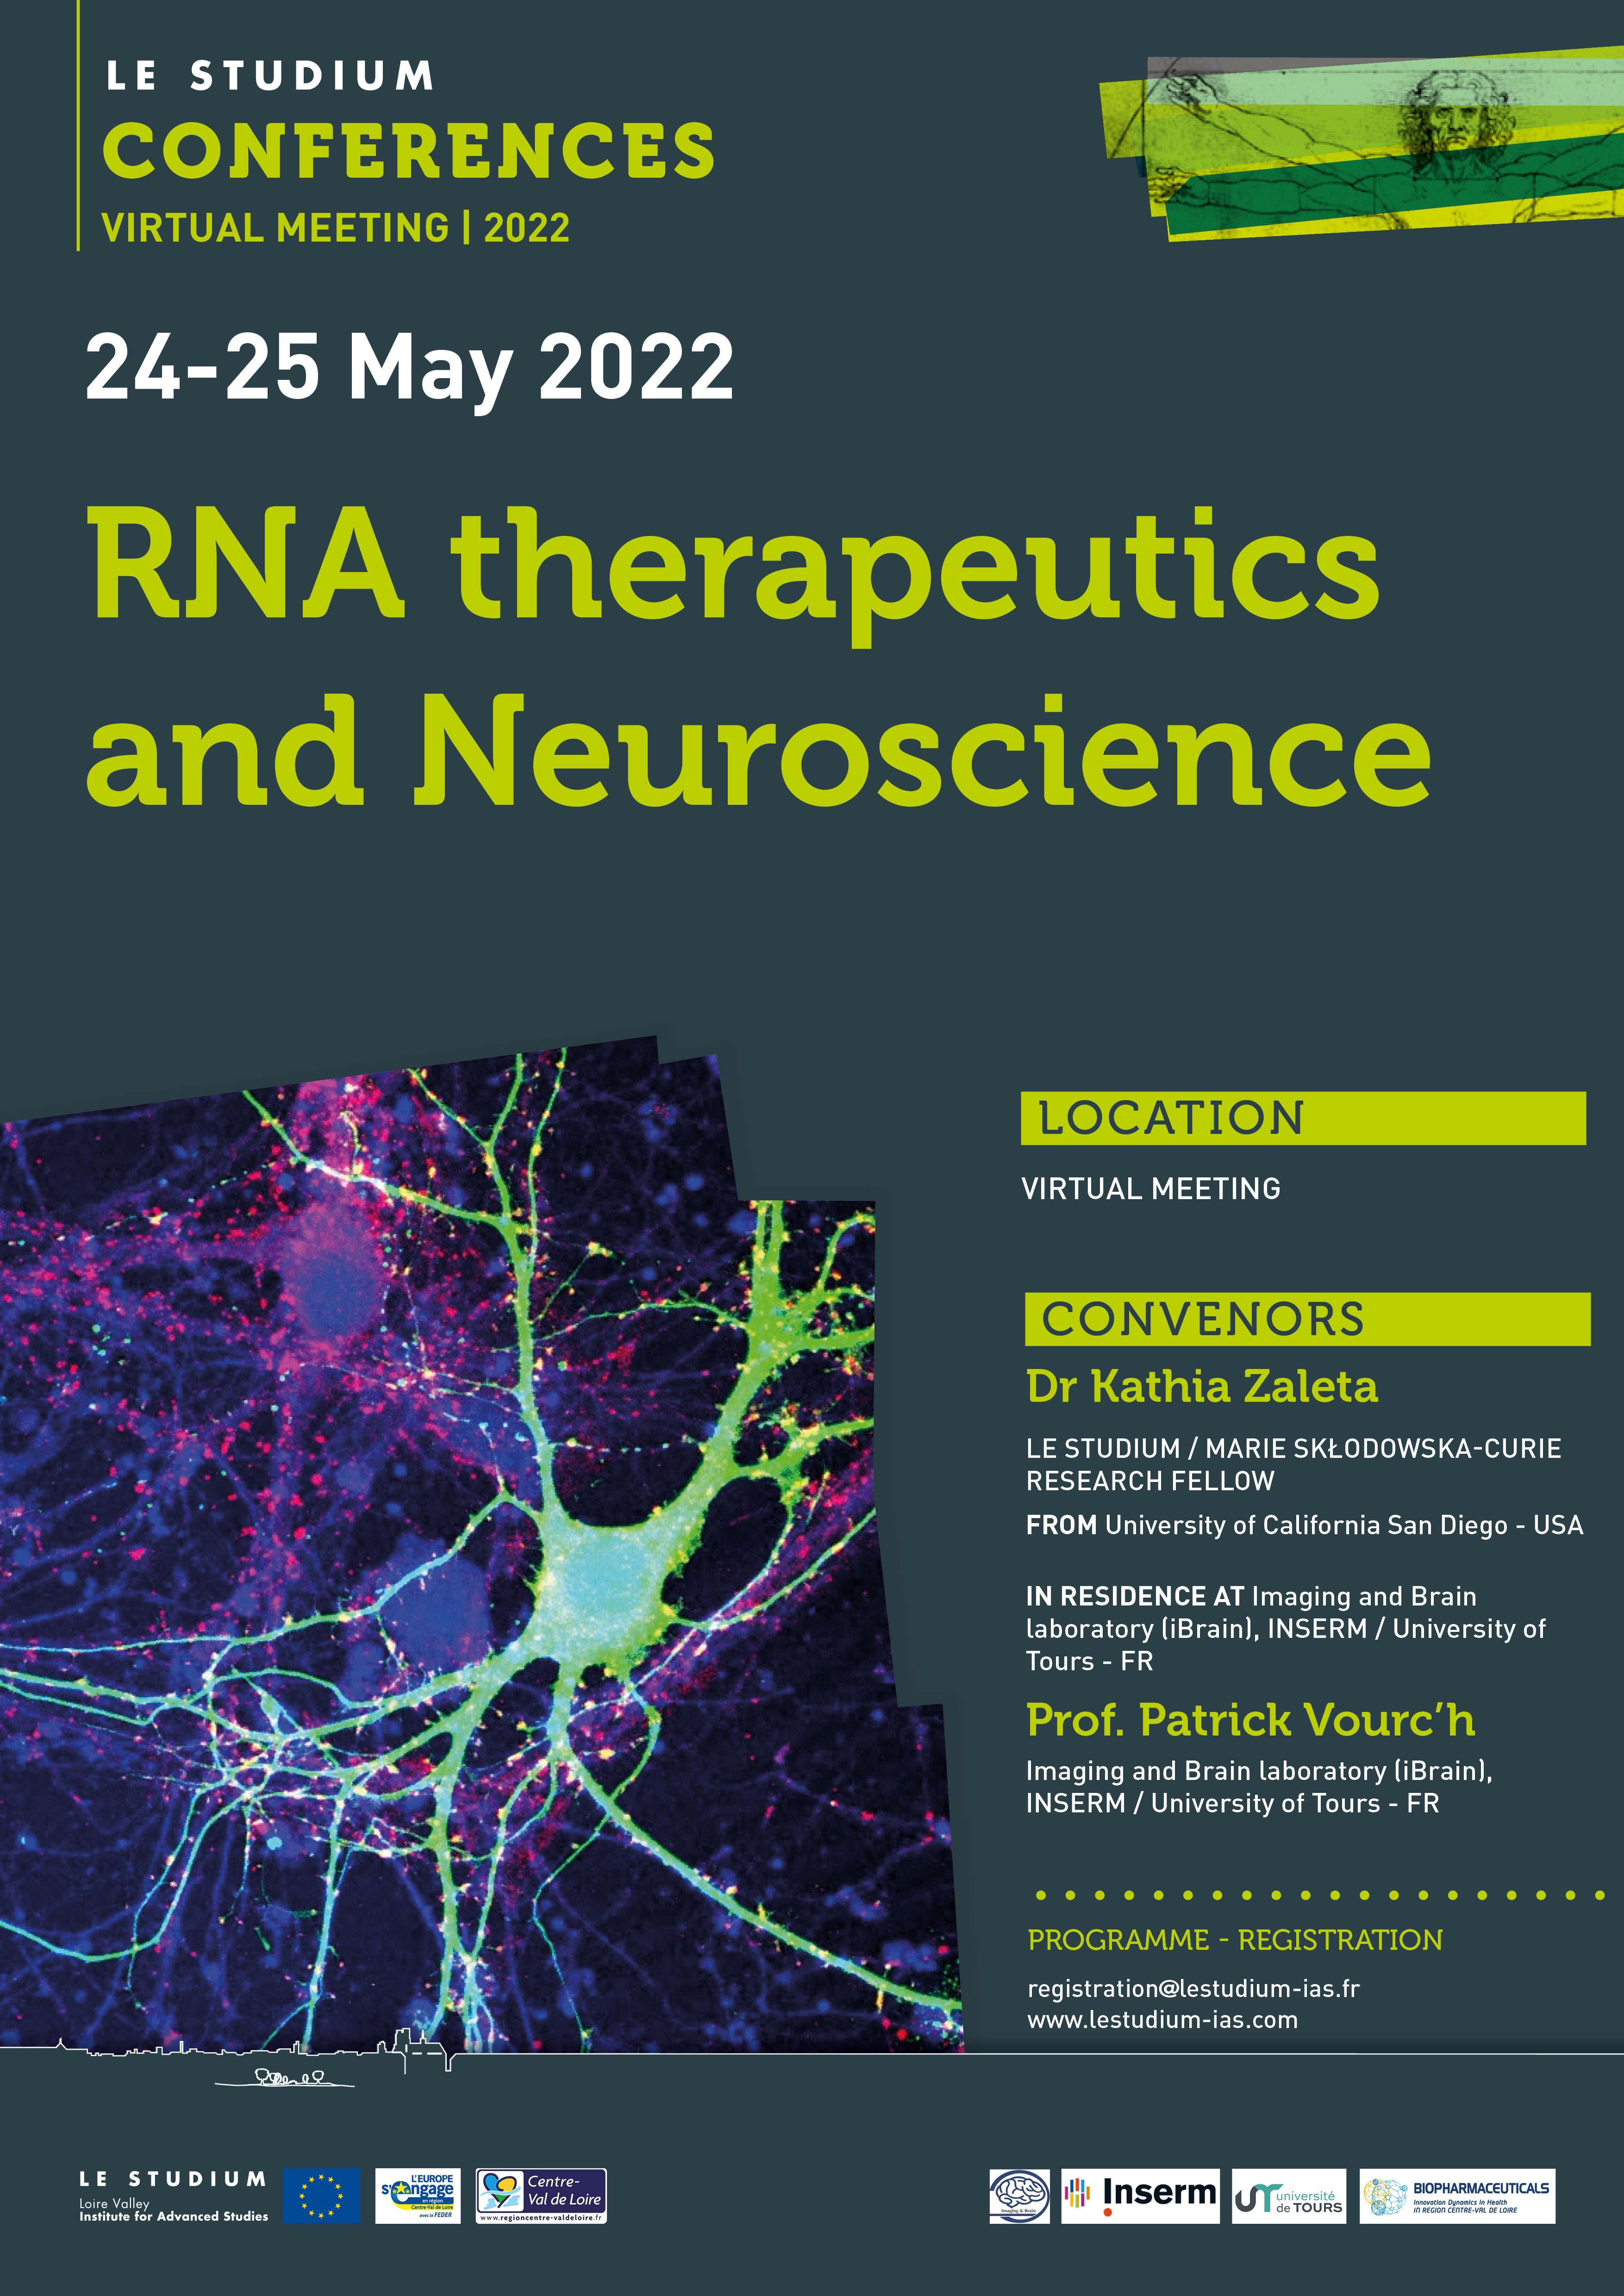 LE STUDIUM CONFERENCE - RNA therapeutics and Neuroscience